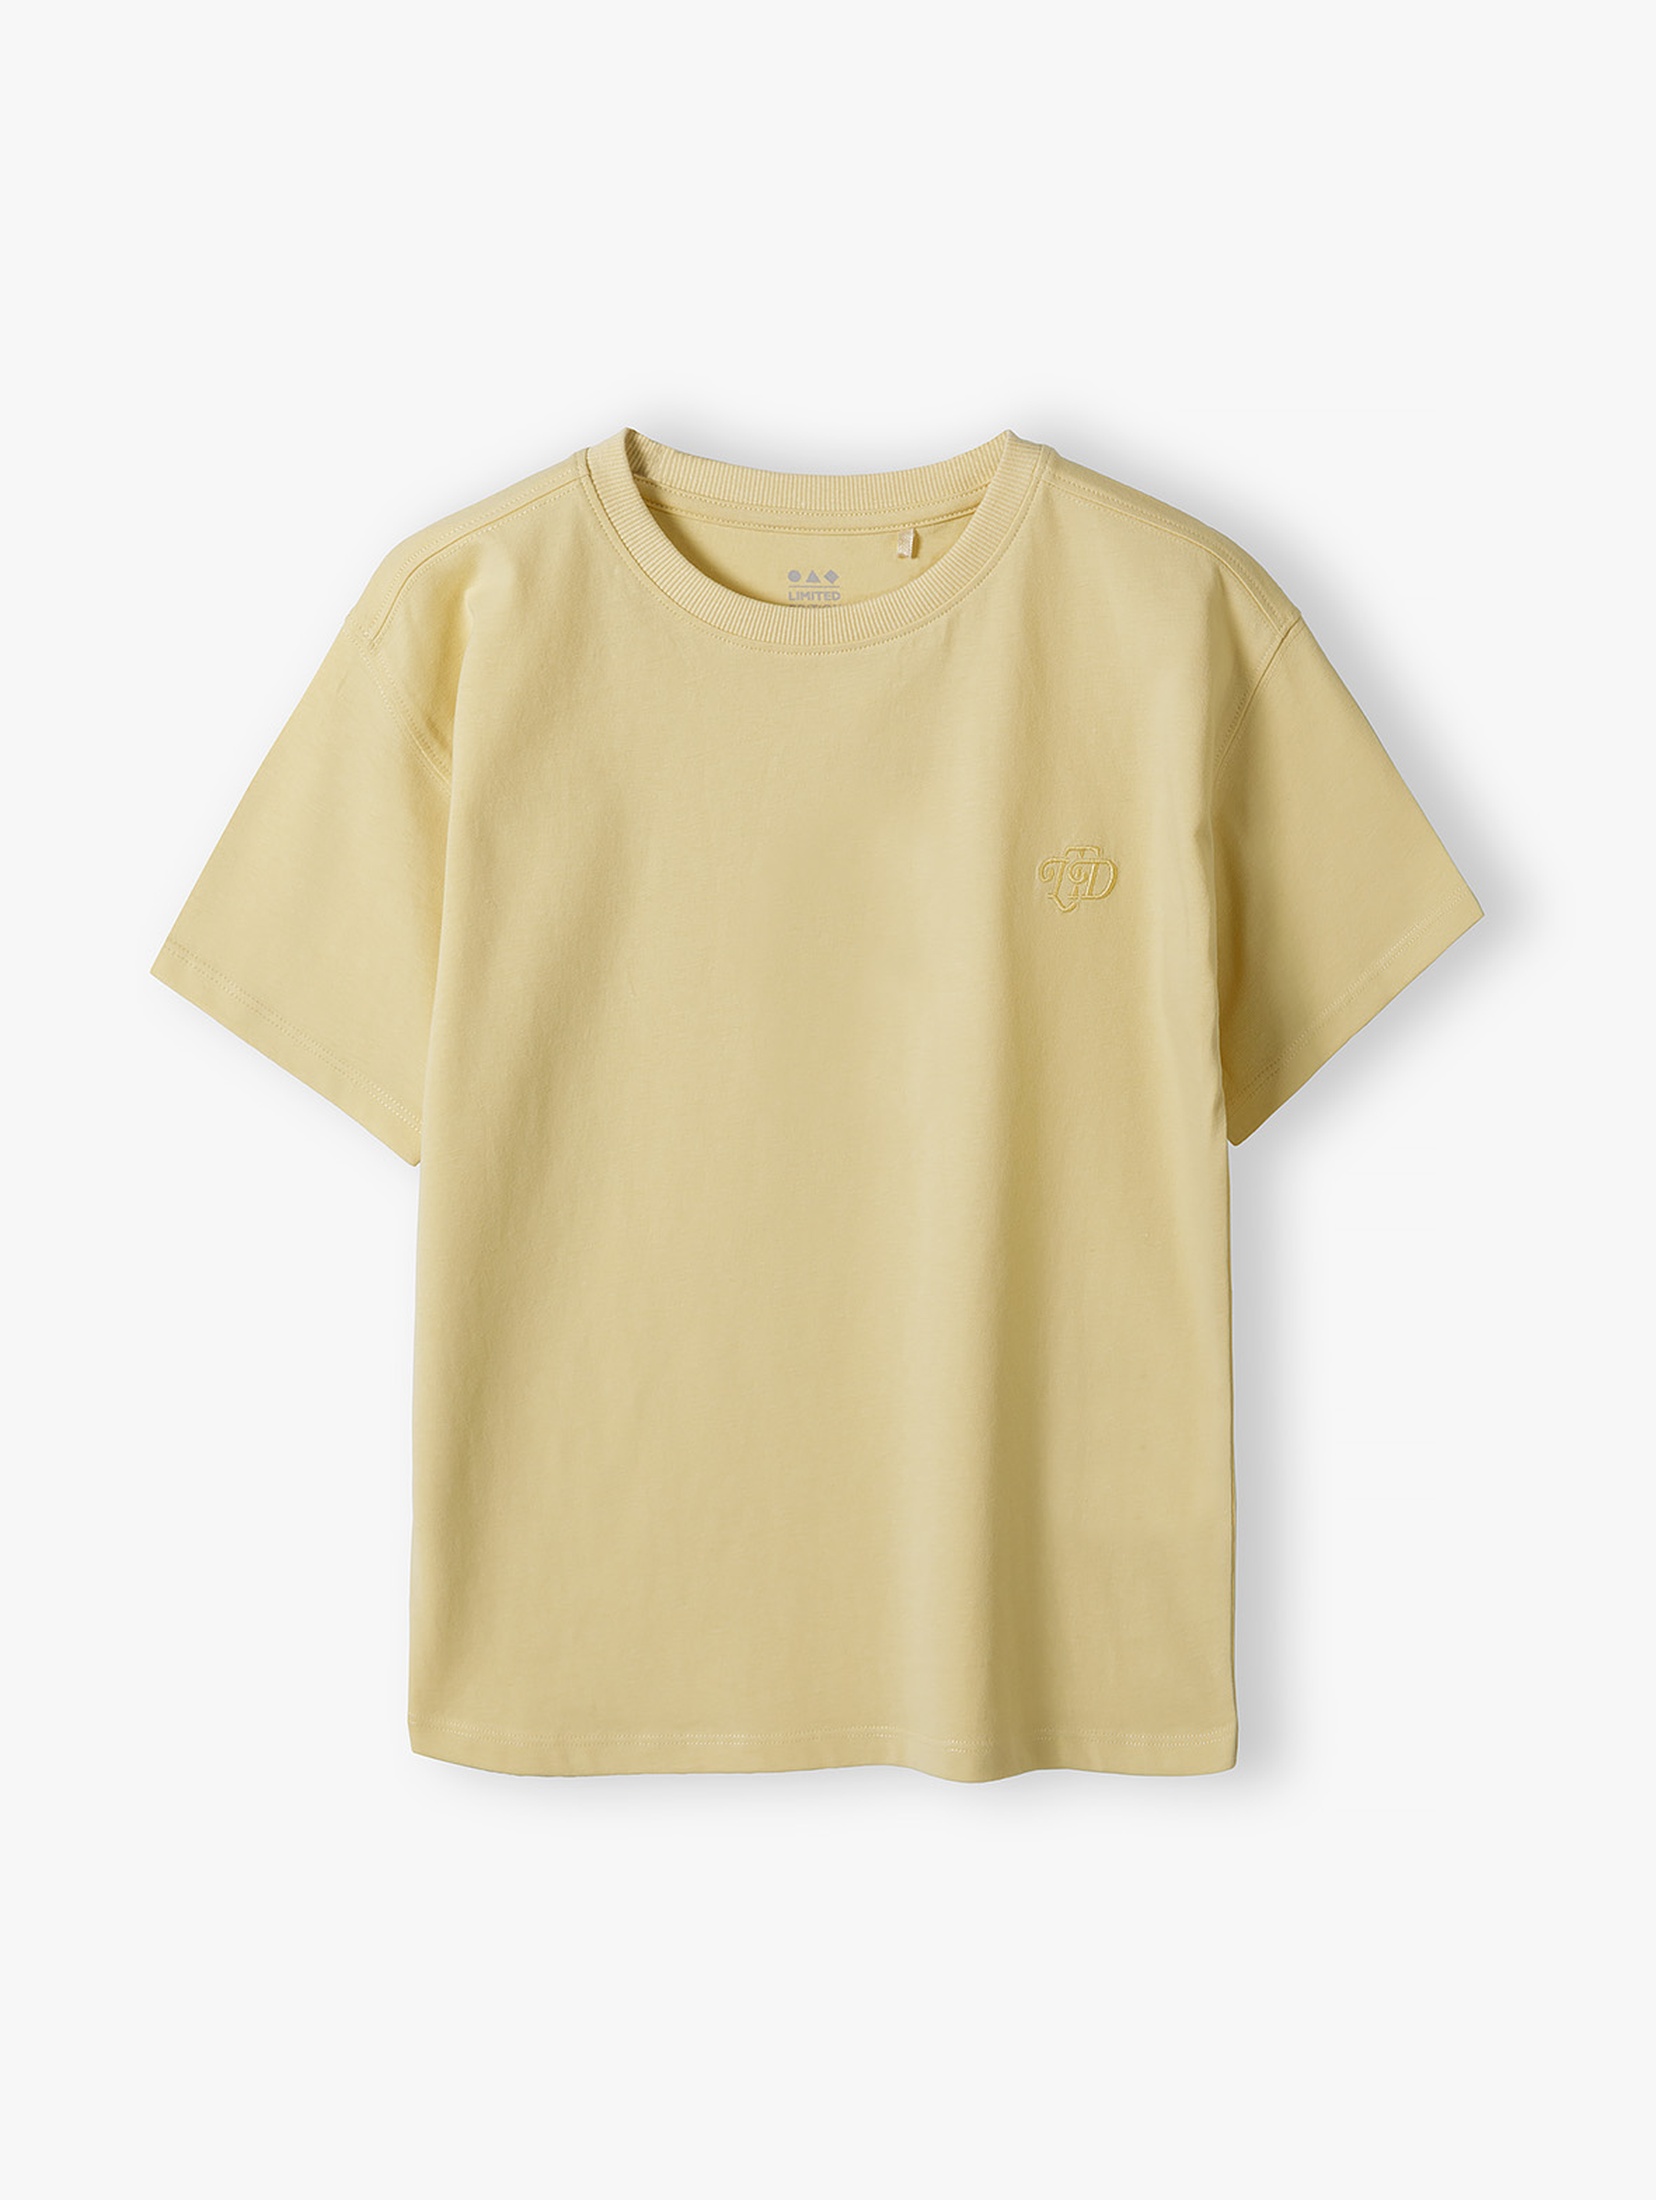 Żółty t-shirt dla dziecka  - Limited Edition